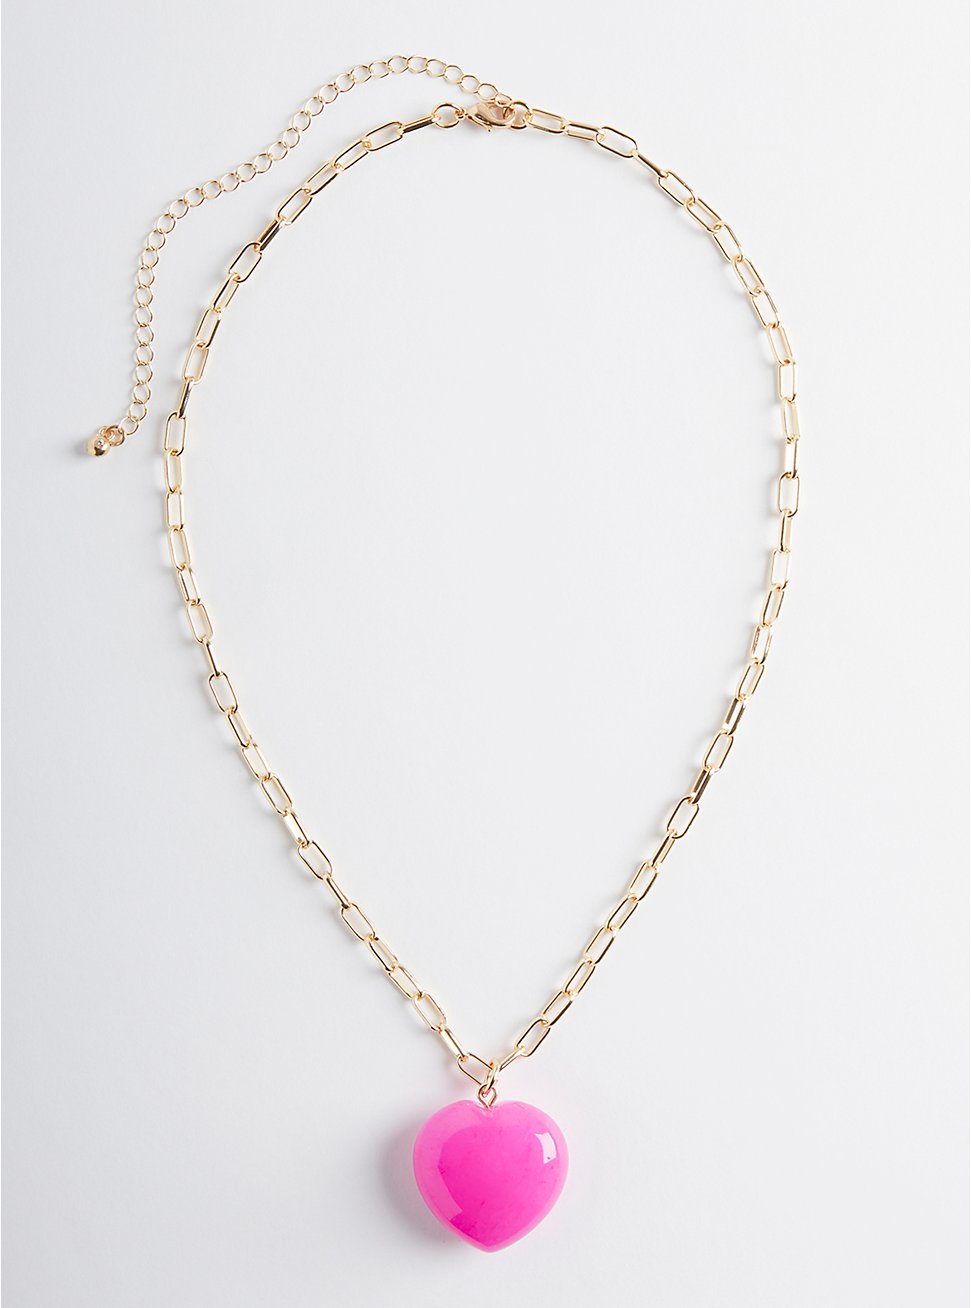 Plus Size Pendant - Gold Tone Link Pink Heart Stone, , hi-res